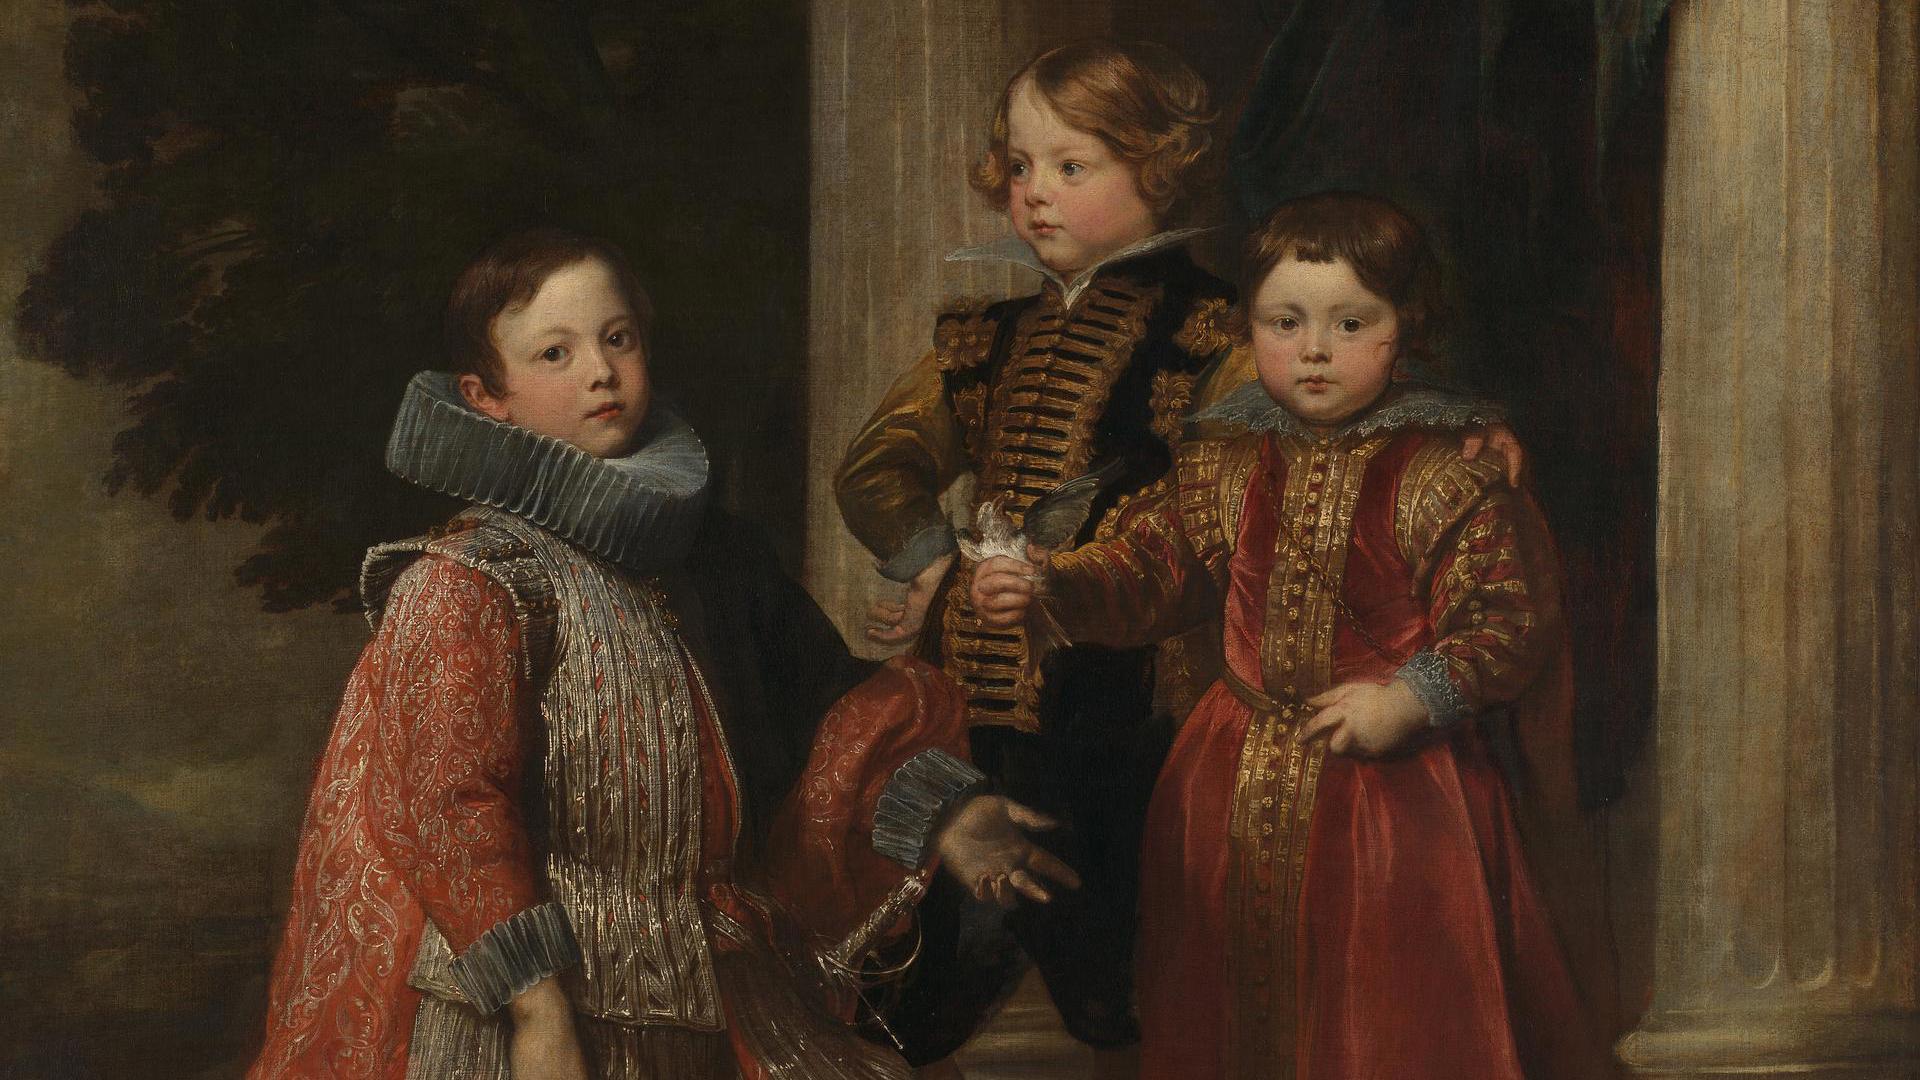 The Balbi Children by Anthony van Dyck